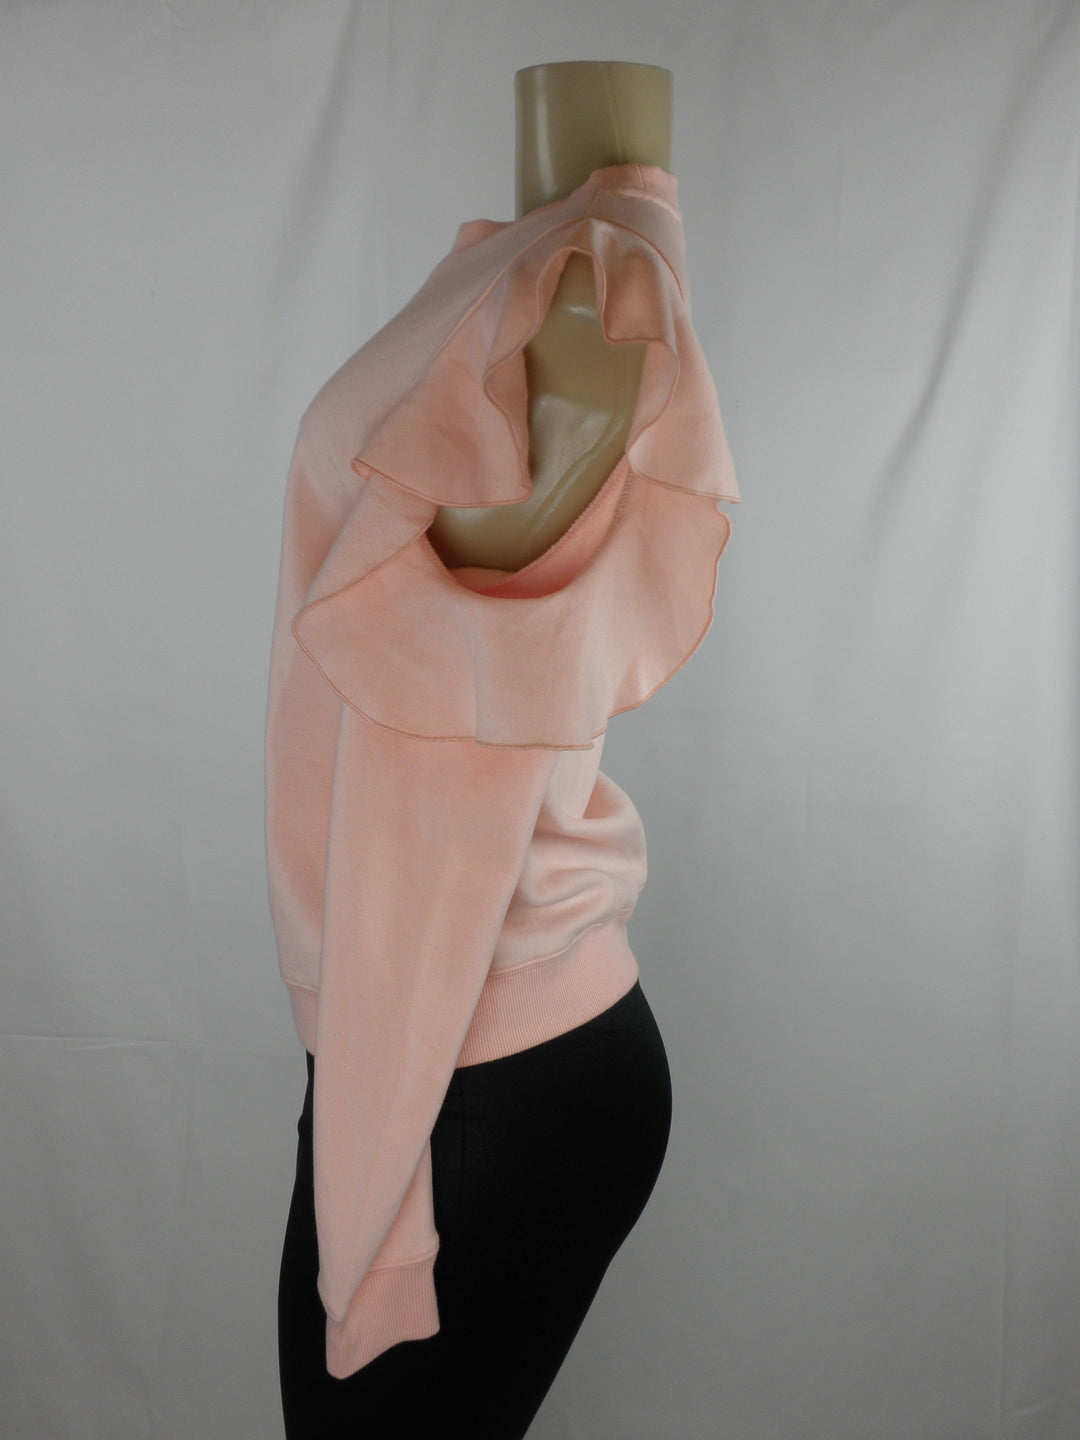 Rebecca Minkoff Pink Ruffle Cutout Sweatshirt - S-M-L - Donated From The Designer - The Fashion Foundation